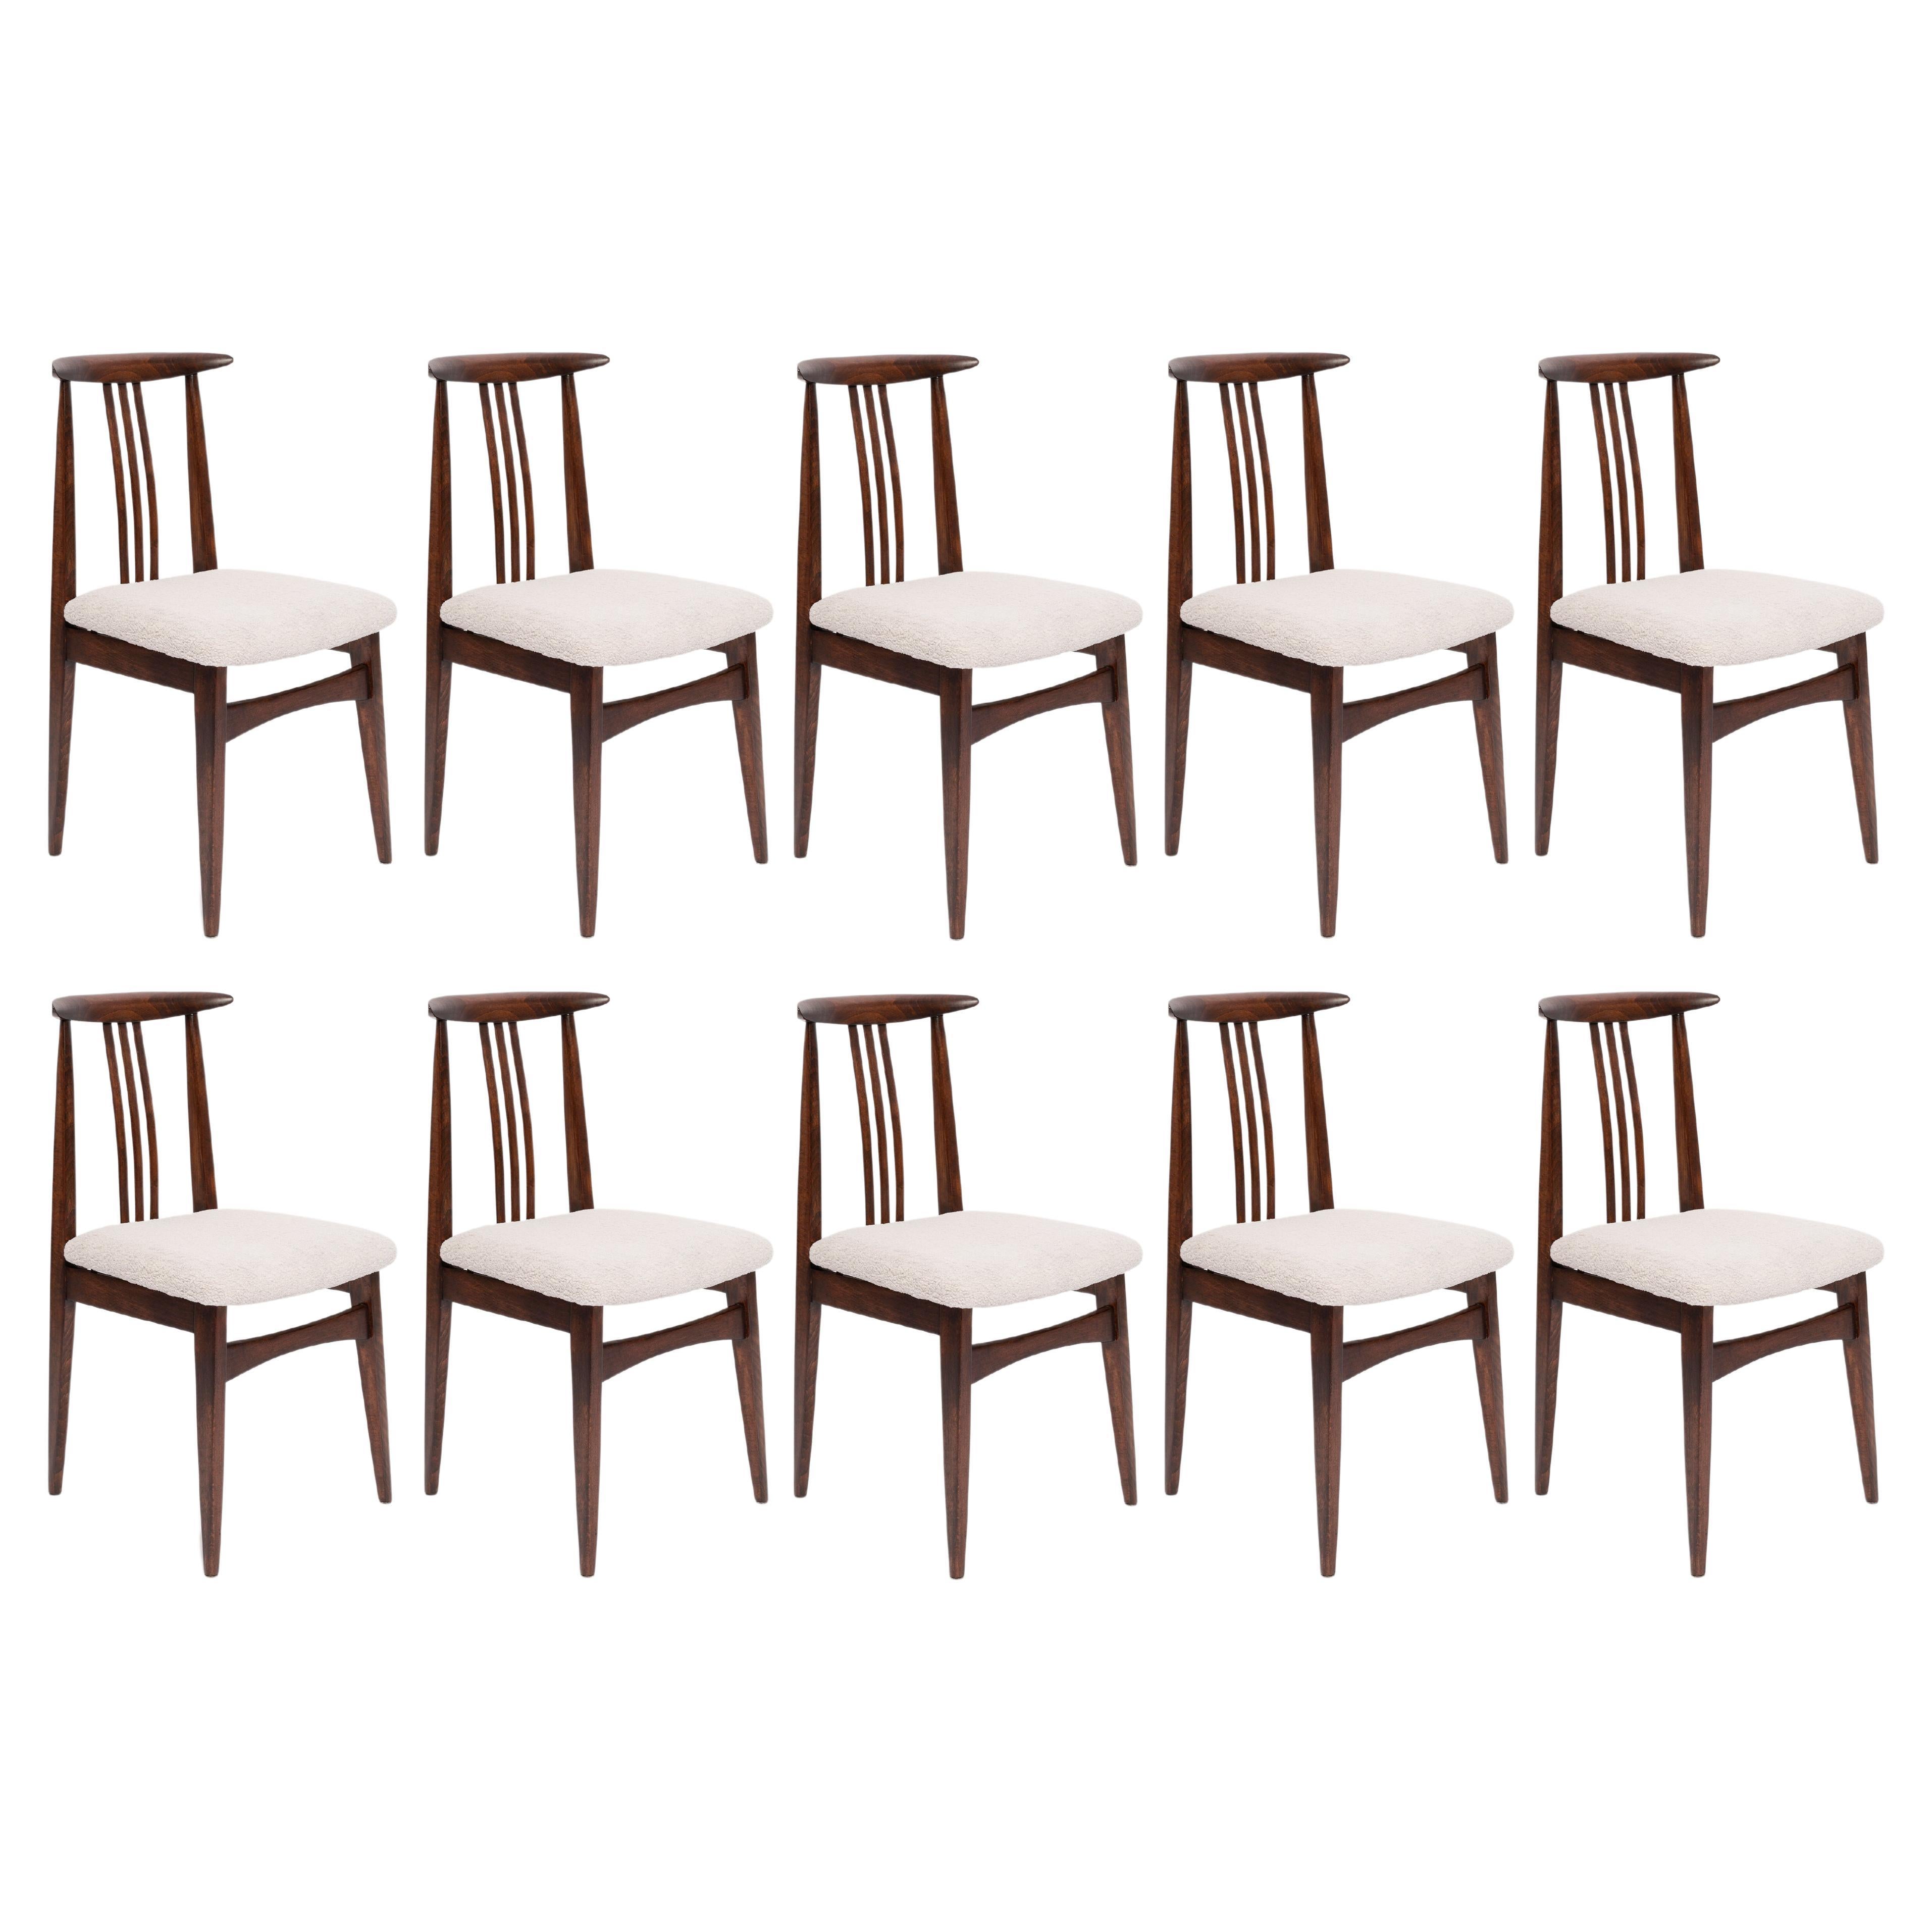 Set of Ten Mid-Century Linen Boucle Chairs, Walnut, M. Zielinski, Europe, 1960s For Sale